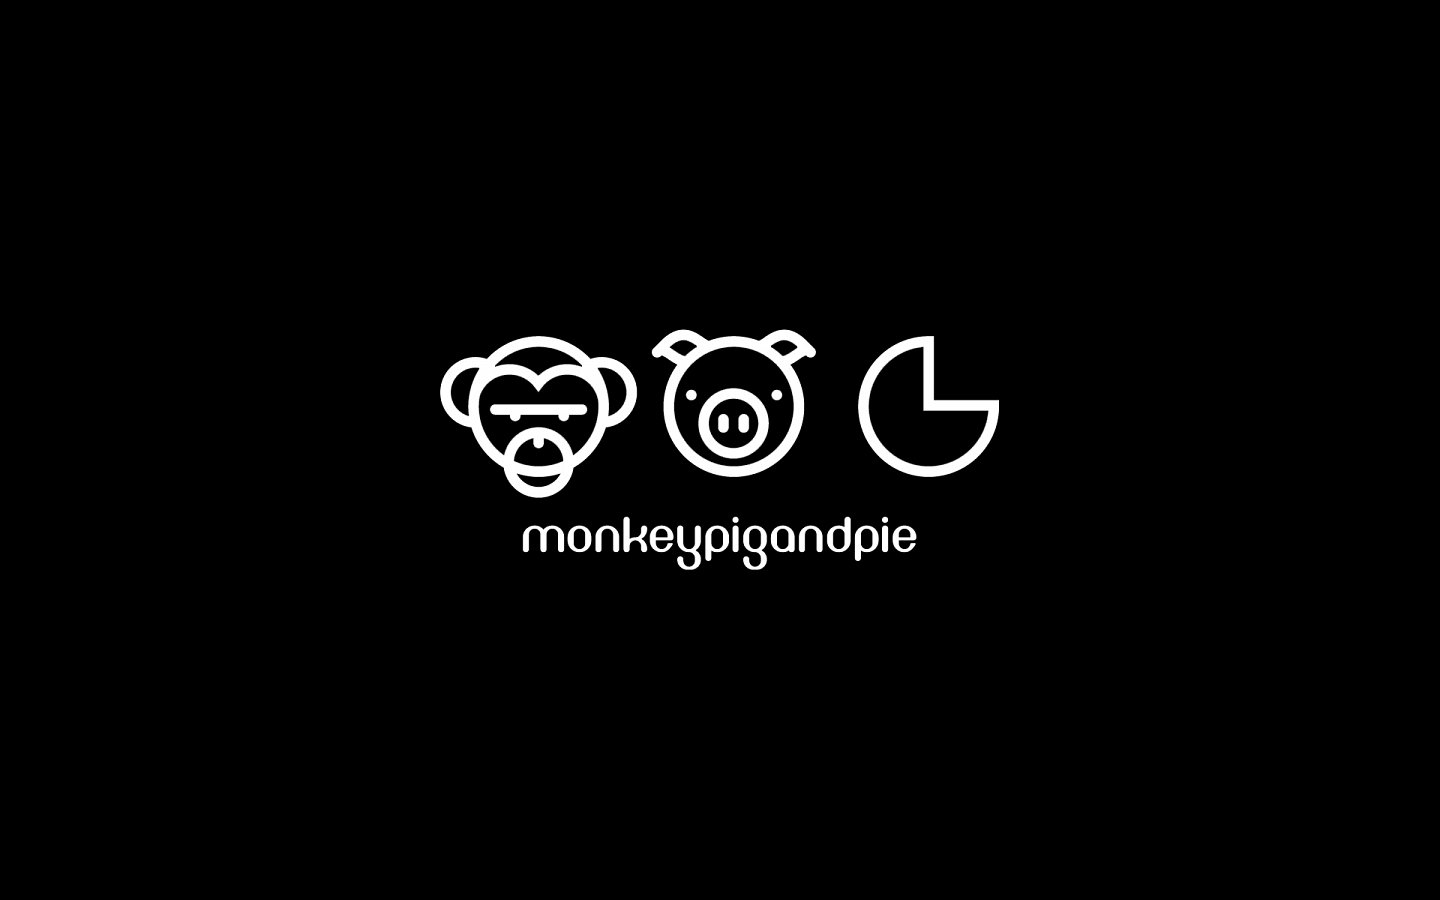 Monkey Pig and Pie, Logo Design Mono Reversed on Black